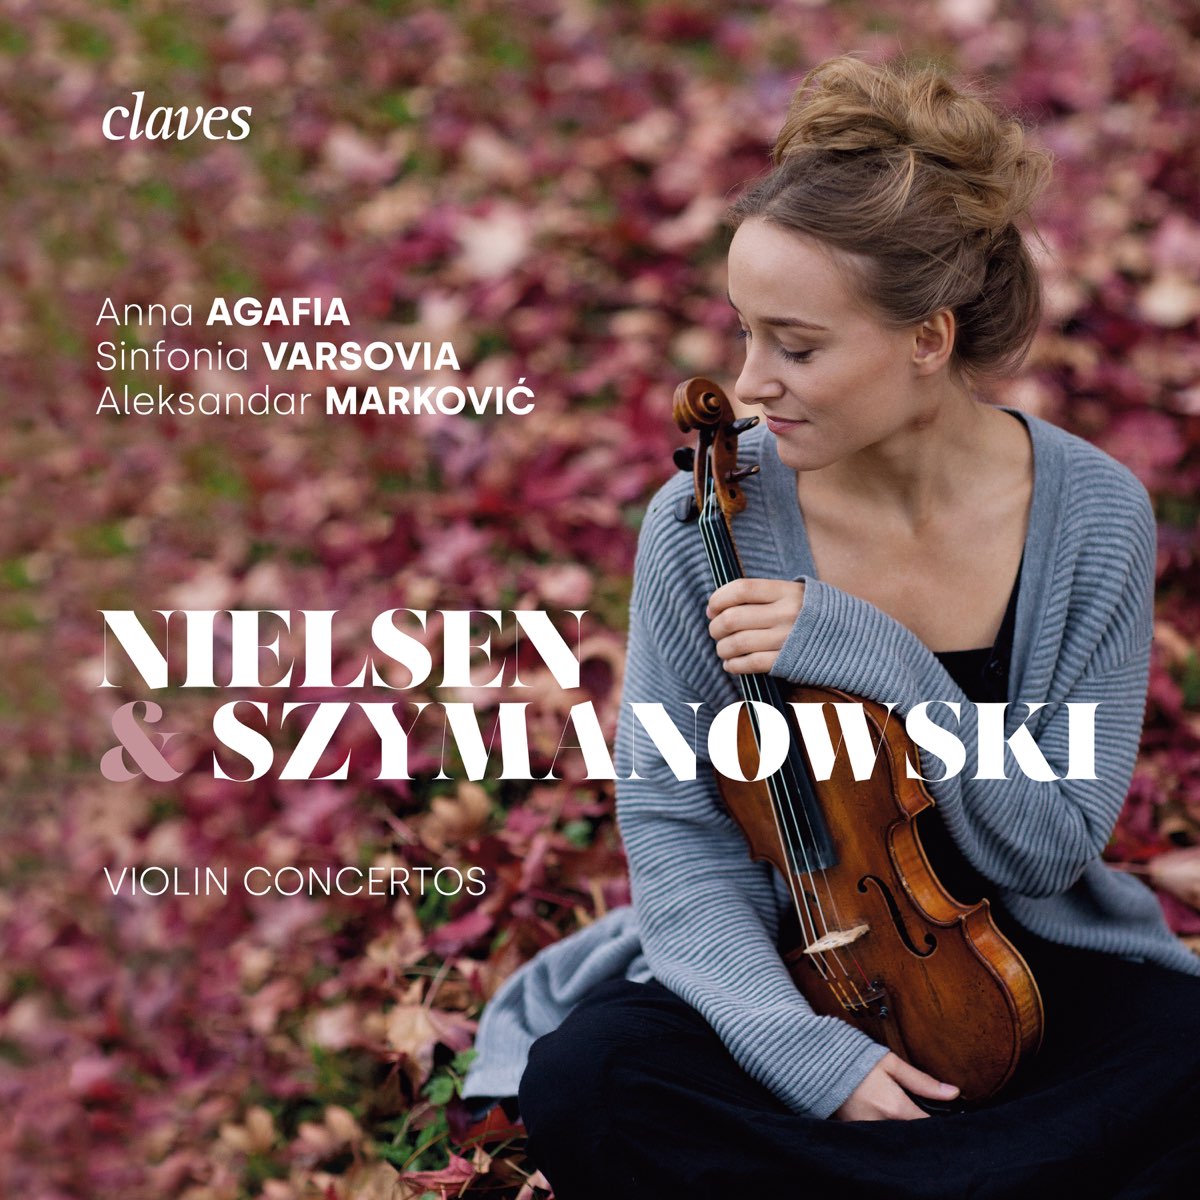 Nielsen & Szymanowski: Violin Concertos by Anna Agafia, Varsovia & Aleksandar Markovic on Apple Music